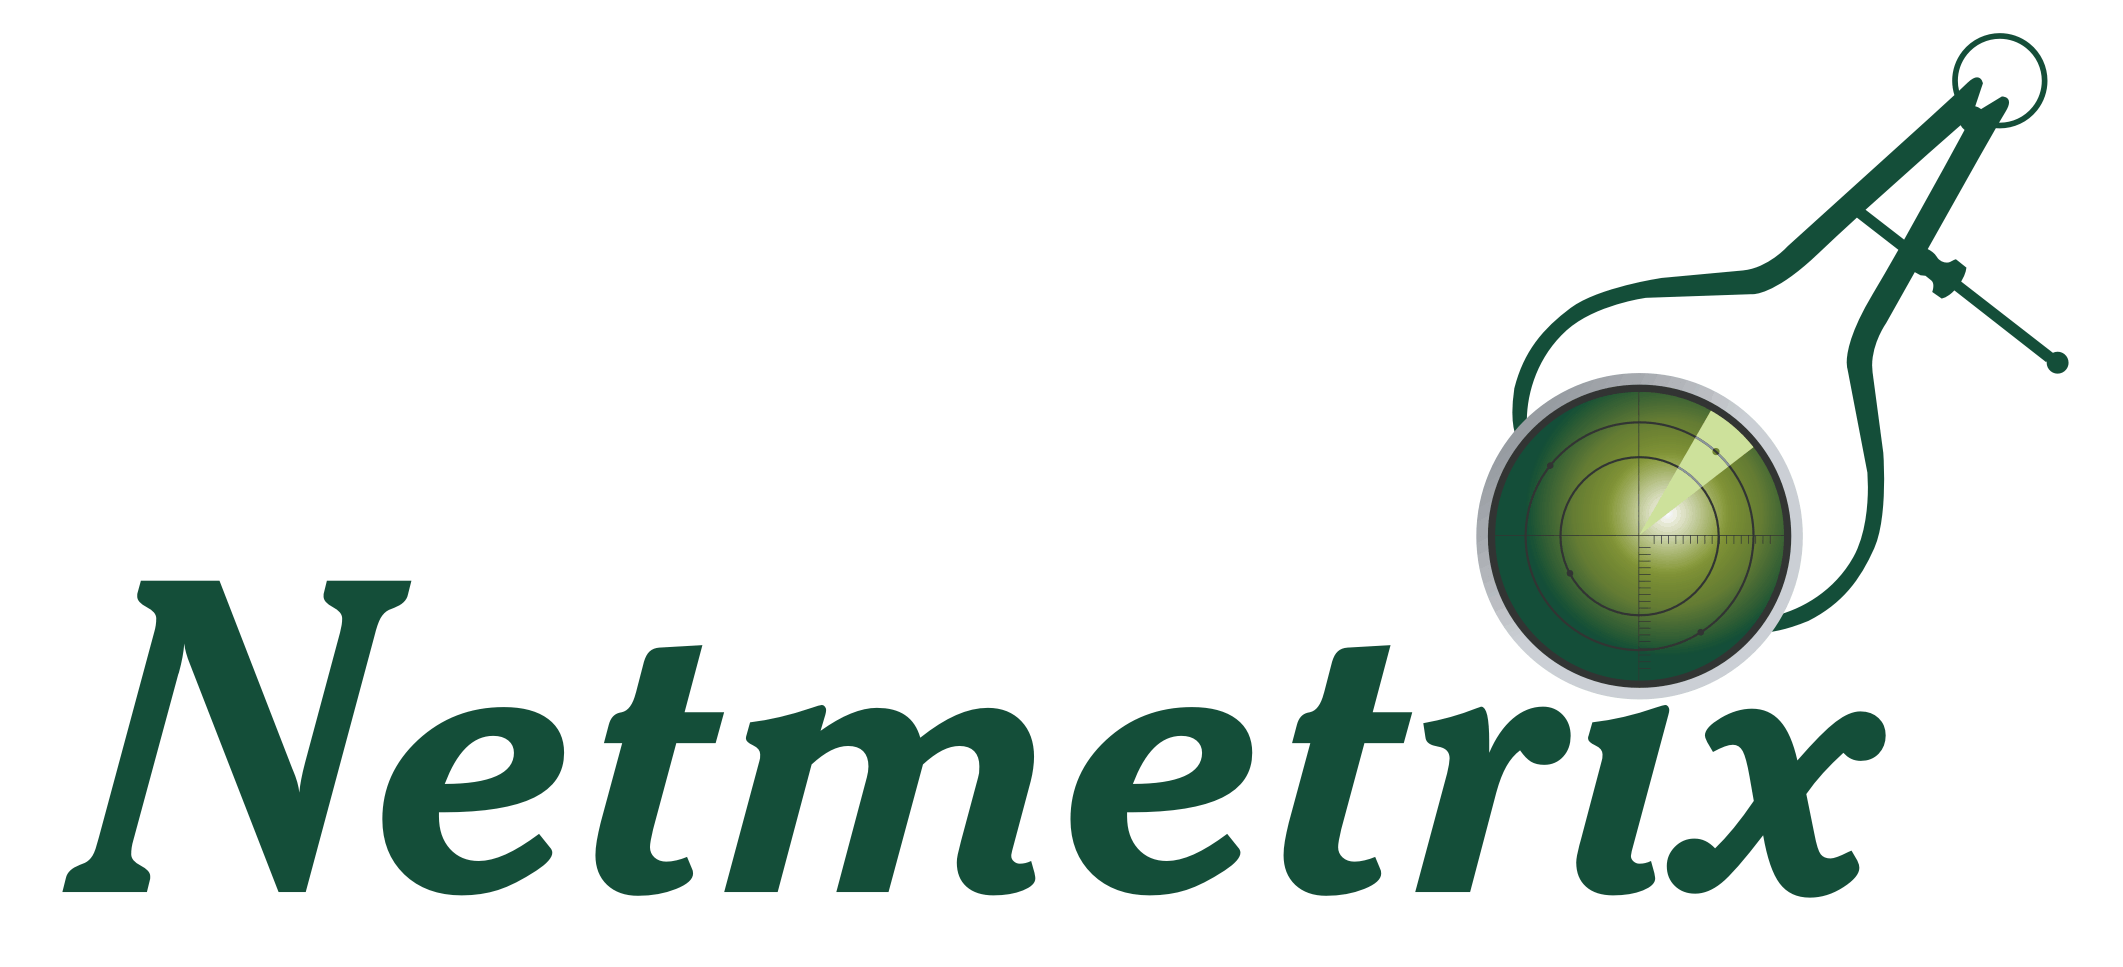 Netmetrix